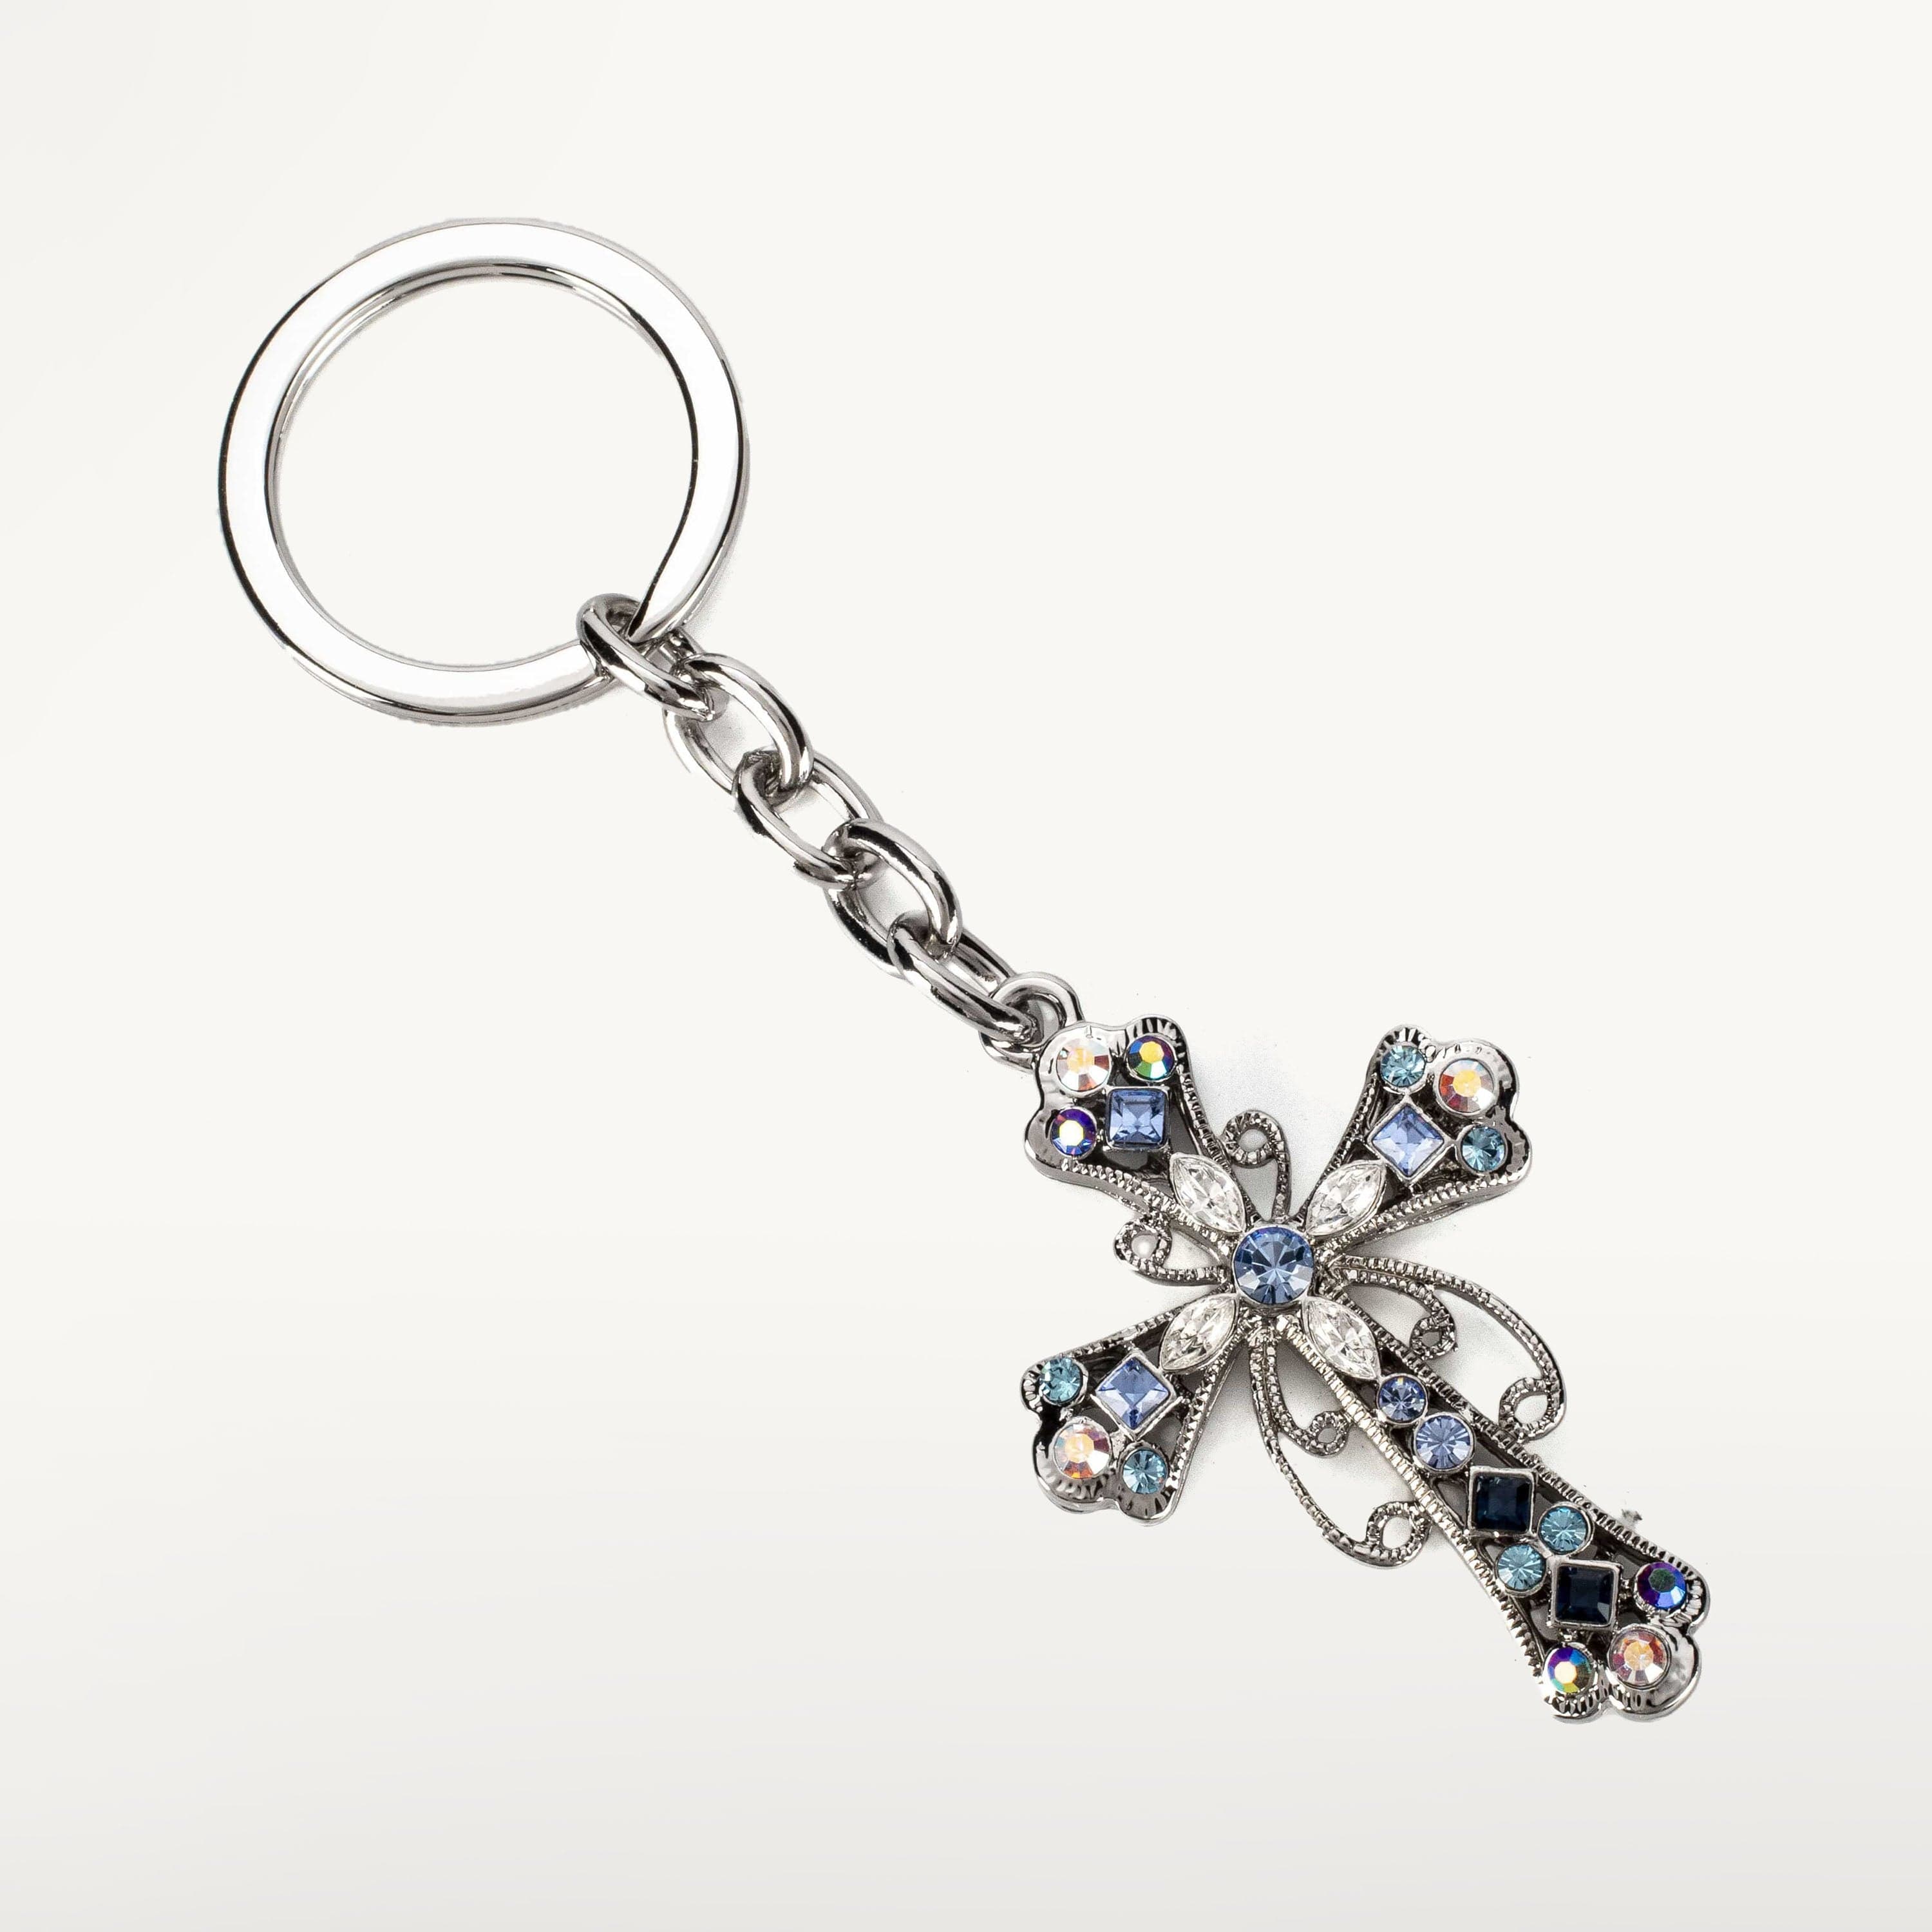 Sapphire Cross Keychain made with Swarovski Crystals